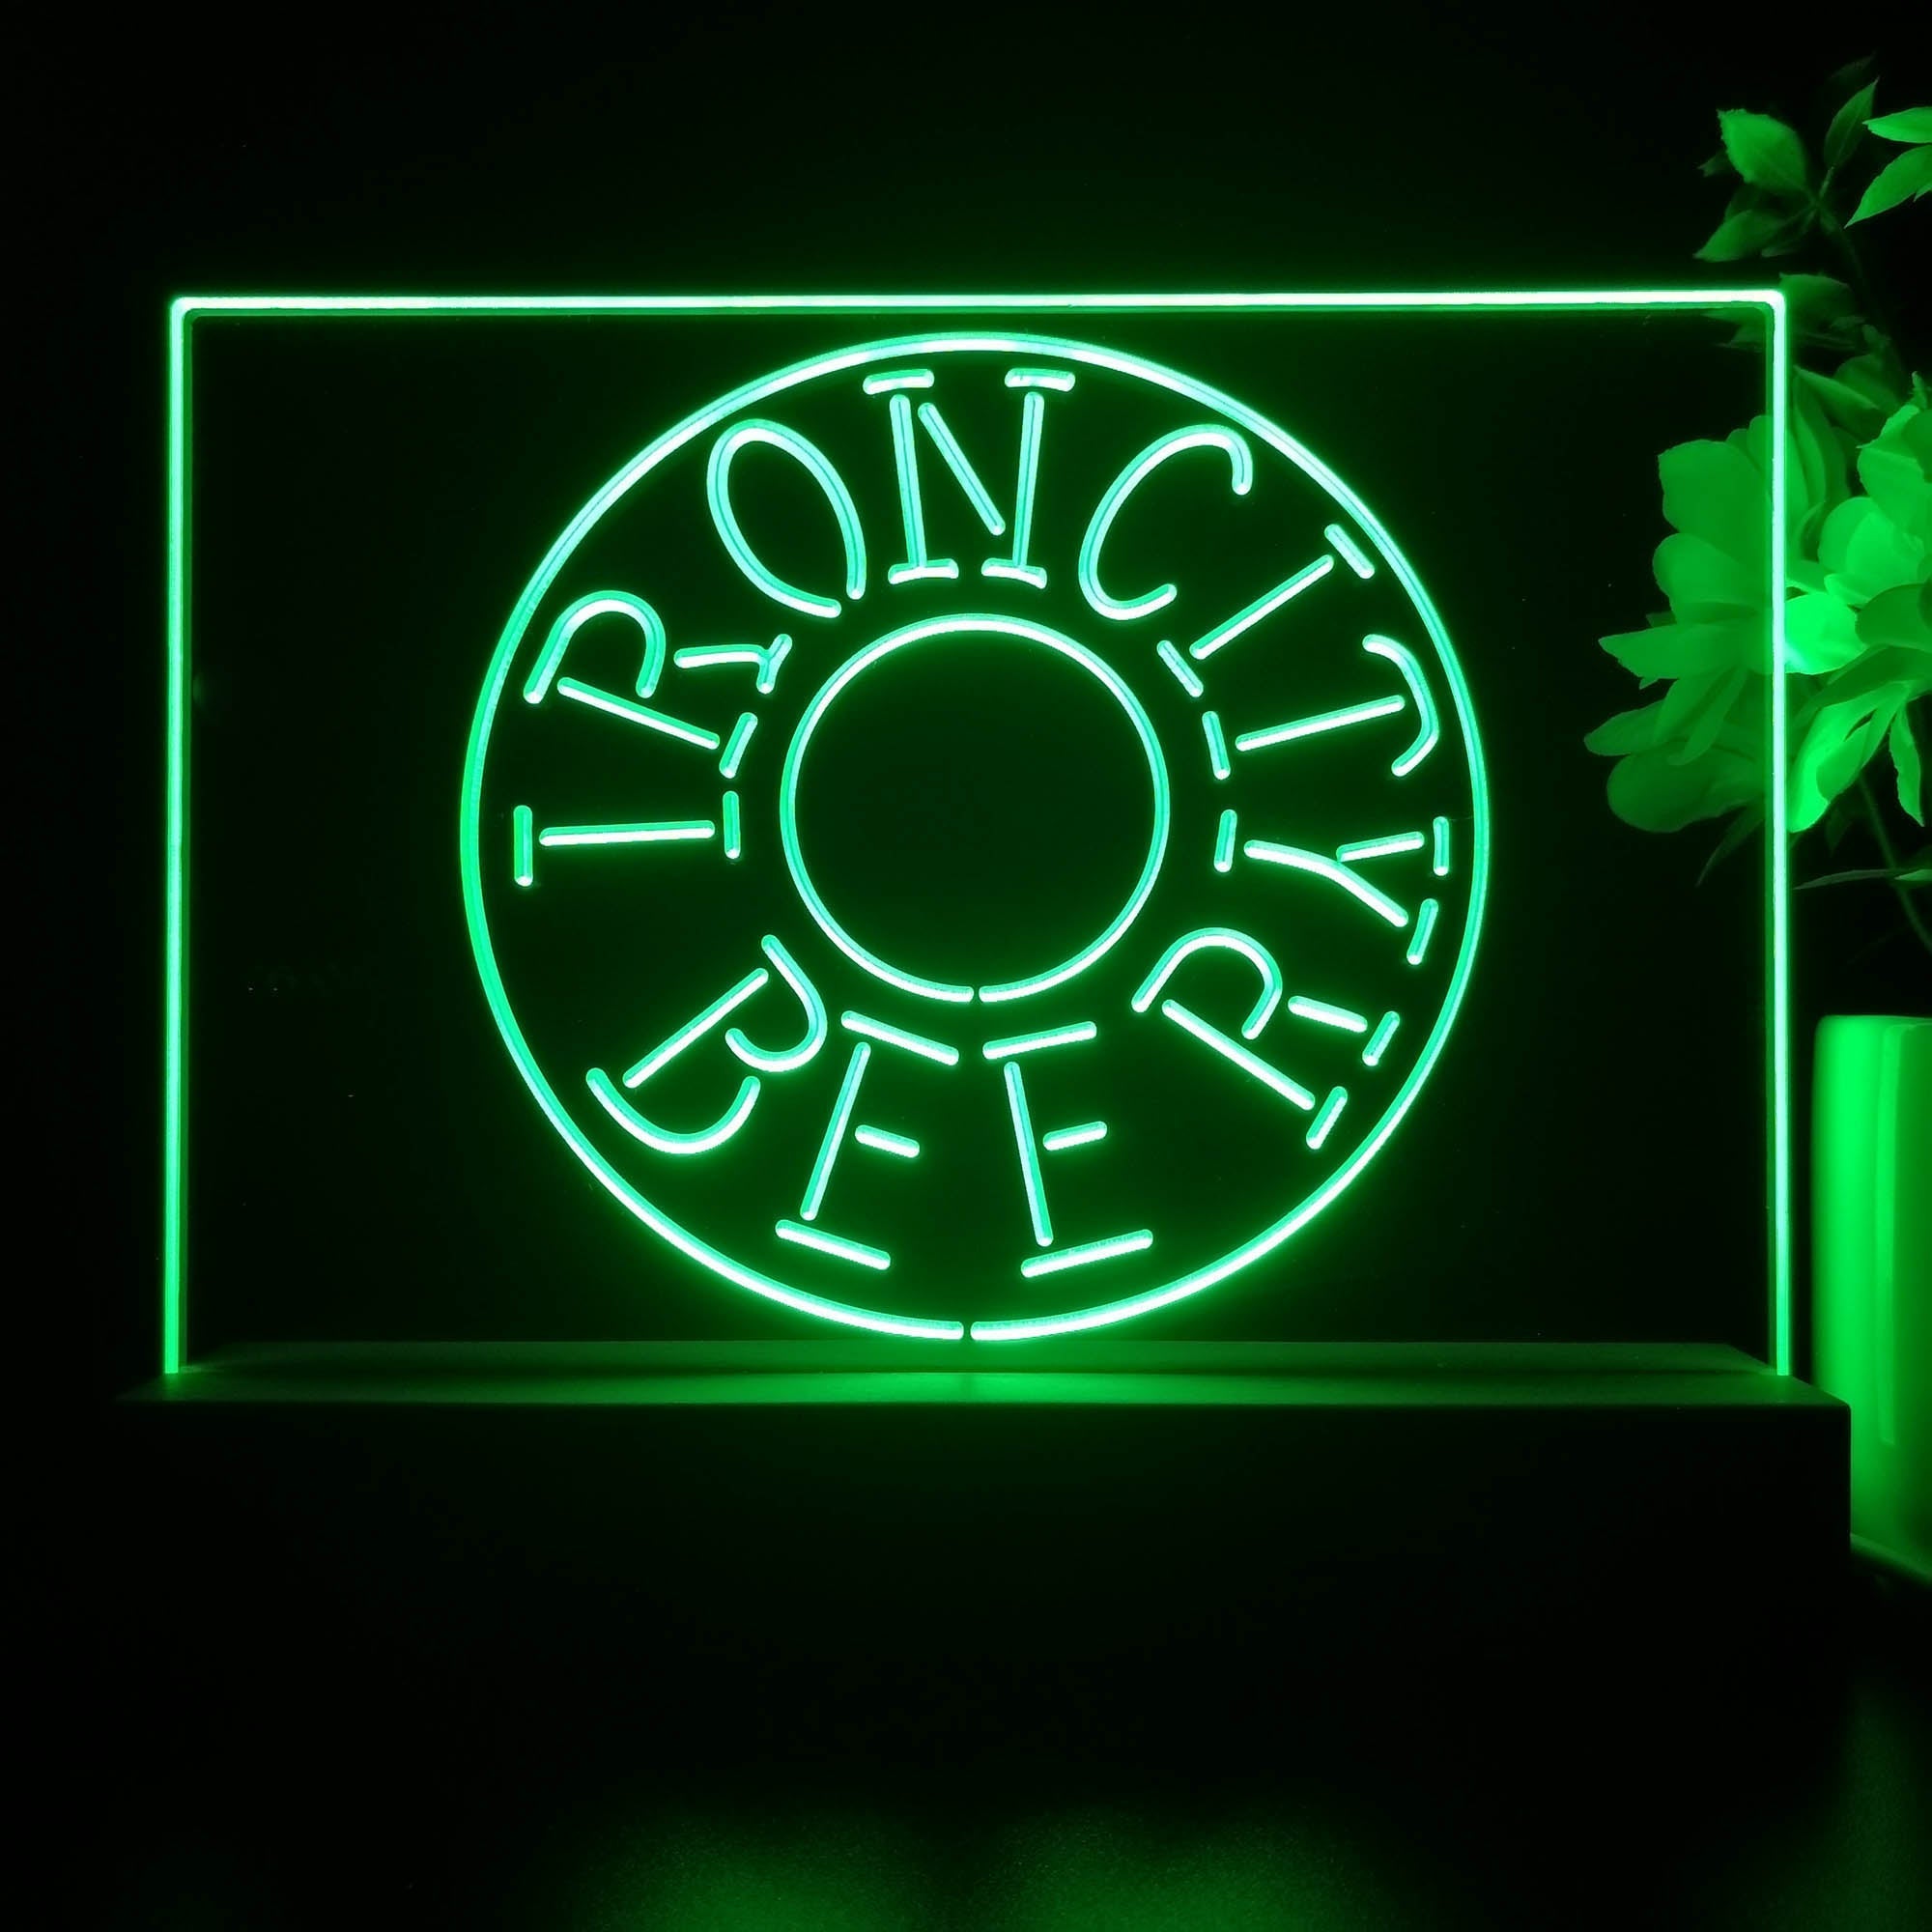 Iron City Beer Neon Sign Pub Bar Lamp